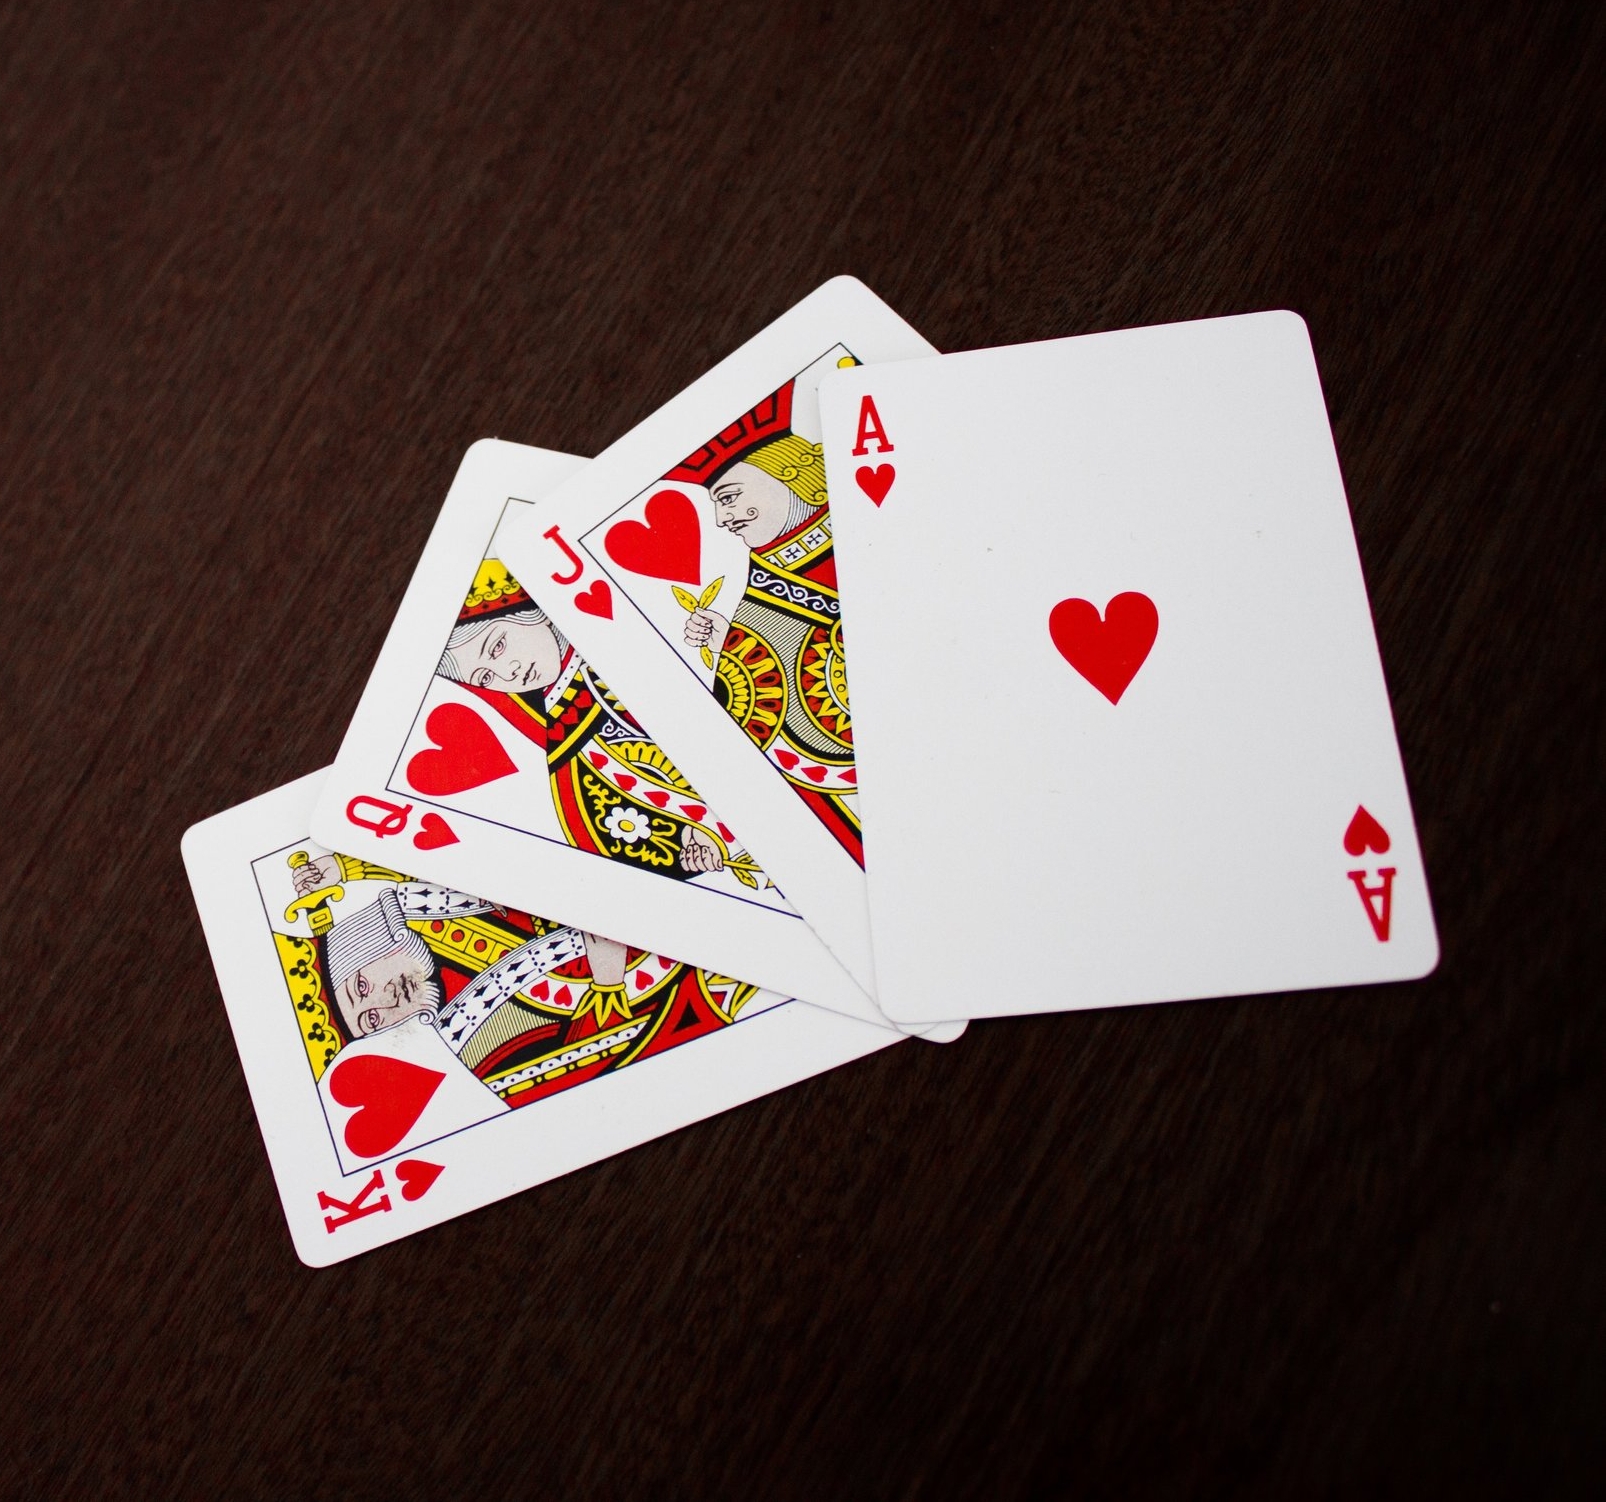 ace-card-game-cards-297507.jpg